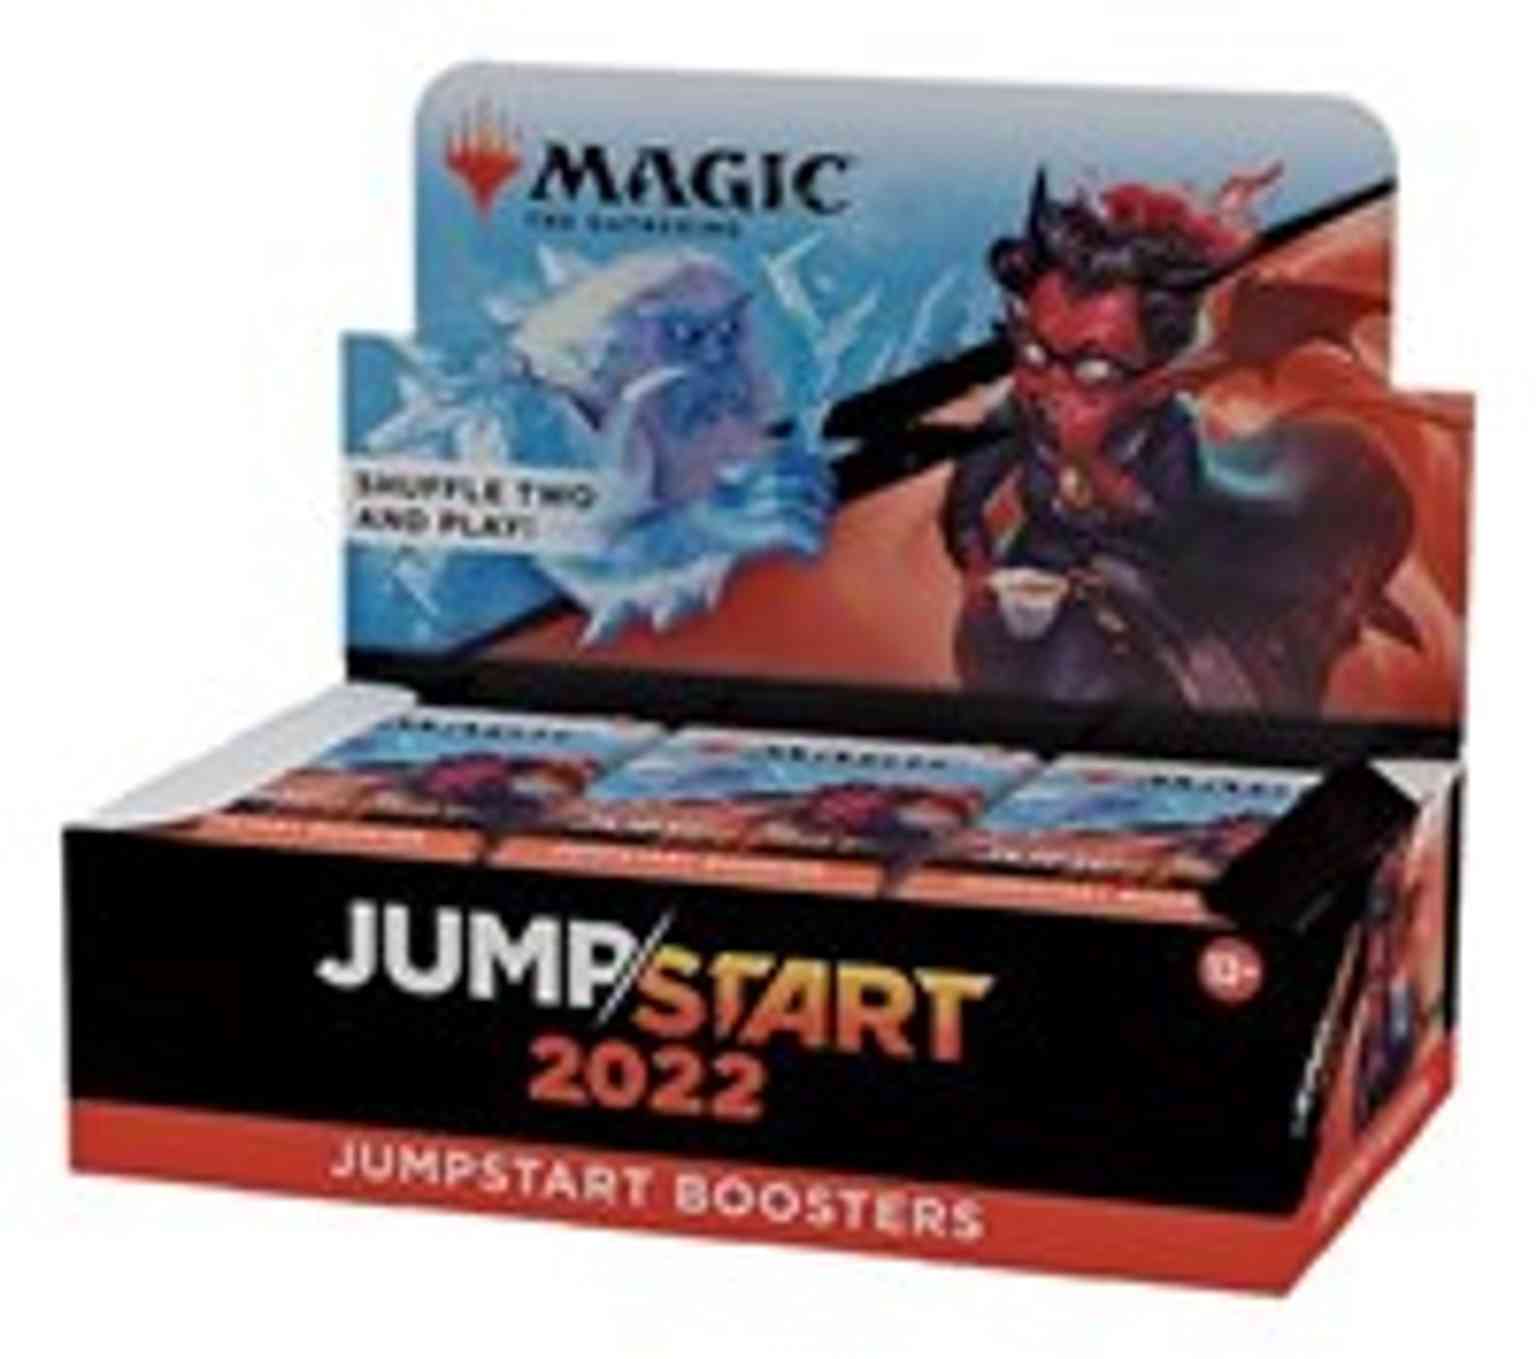 Jumpstart 2022 Booster Display magic card front